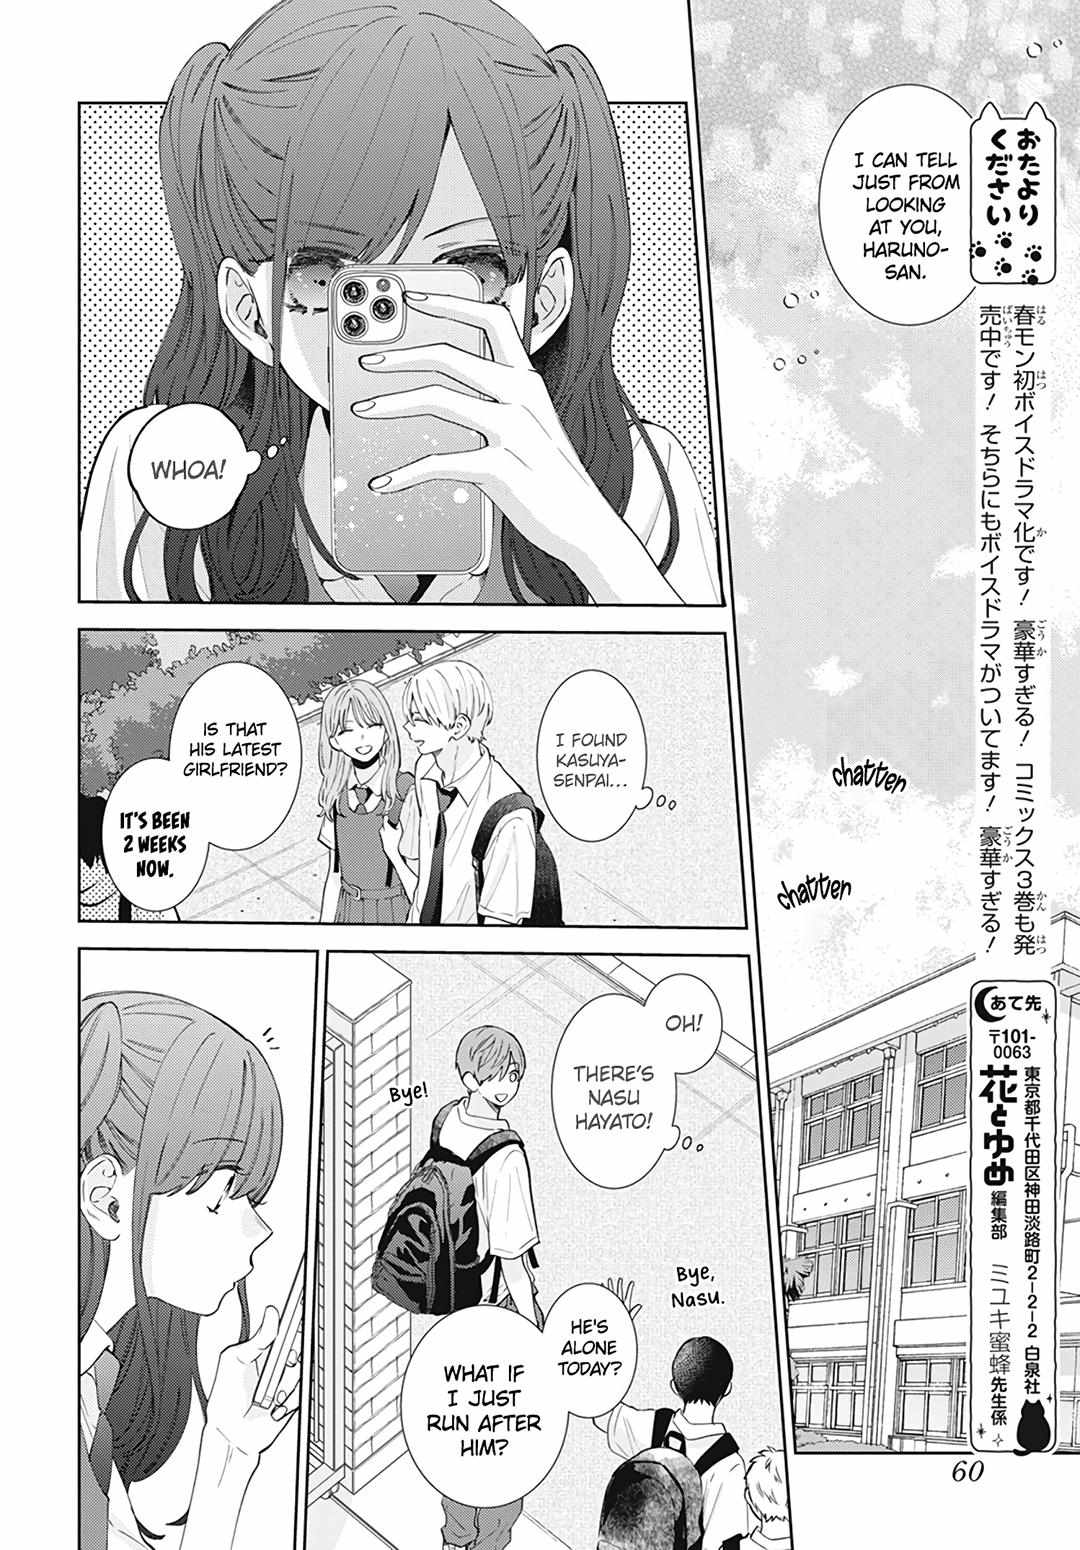 Haru No Arashi To Monster - 17 page 19-0e0aa60b